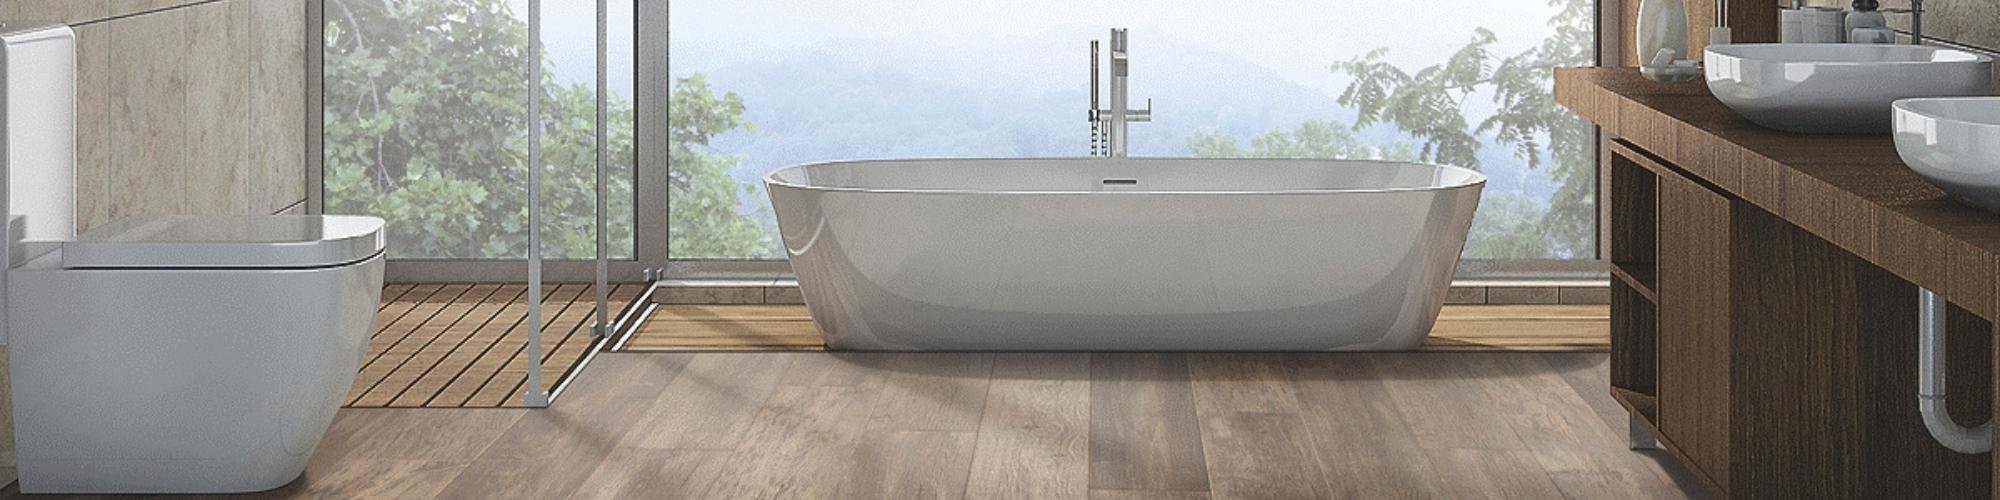 Bathroom with modern bathtub and RevWood hardwood flooring